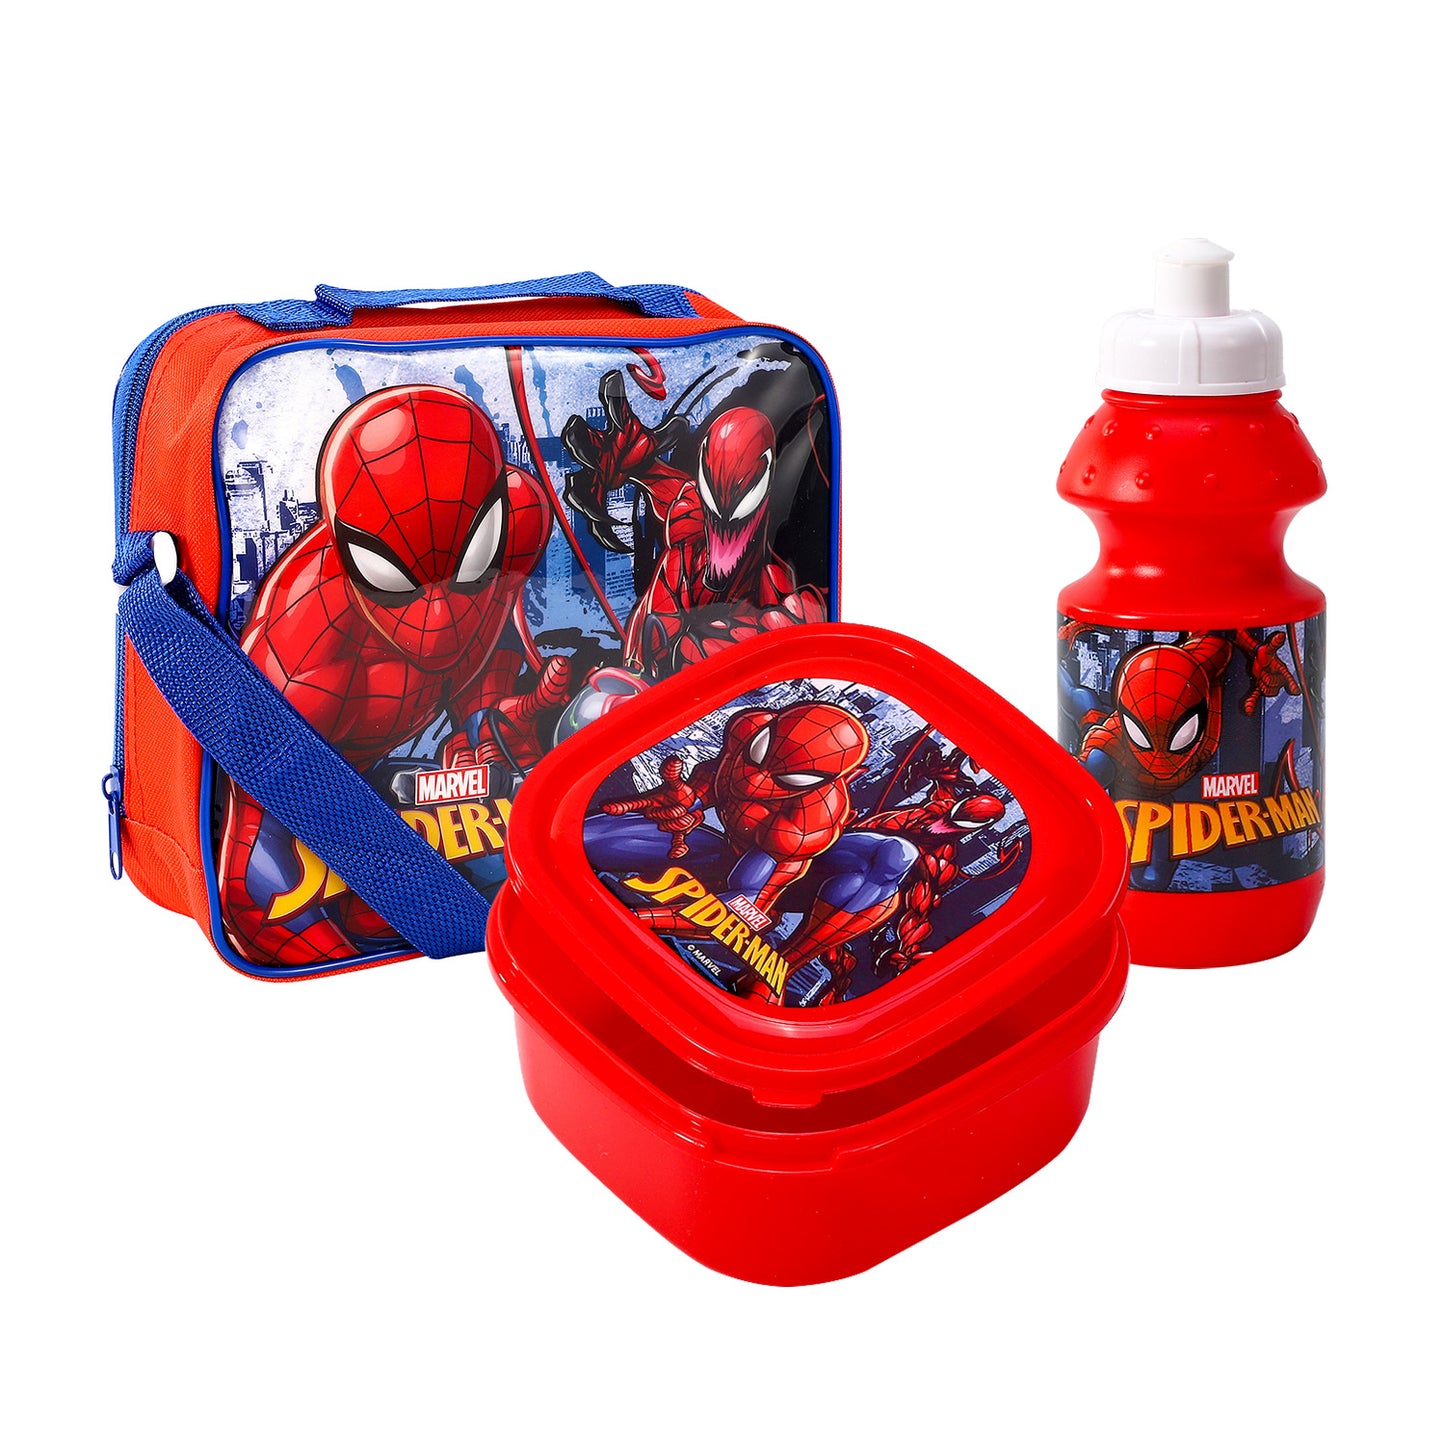 Spider-Man 3Pc Lunch Set, Lunch Bag, Plastic Bottle, Storage Container School Day